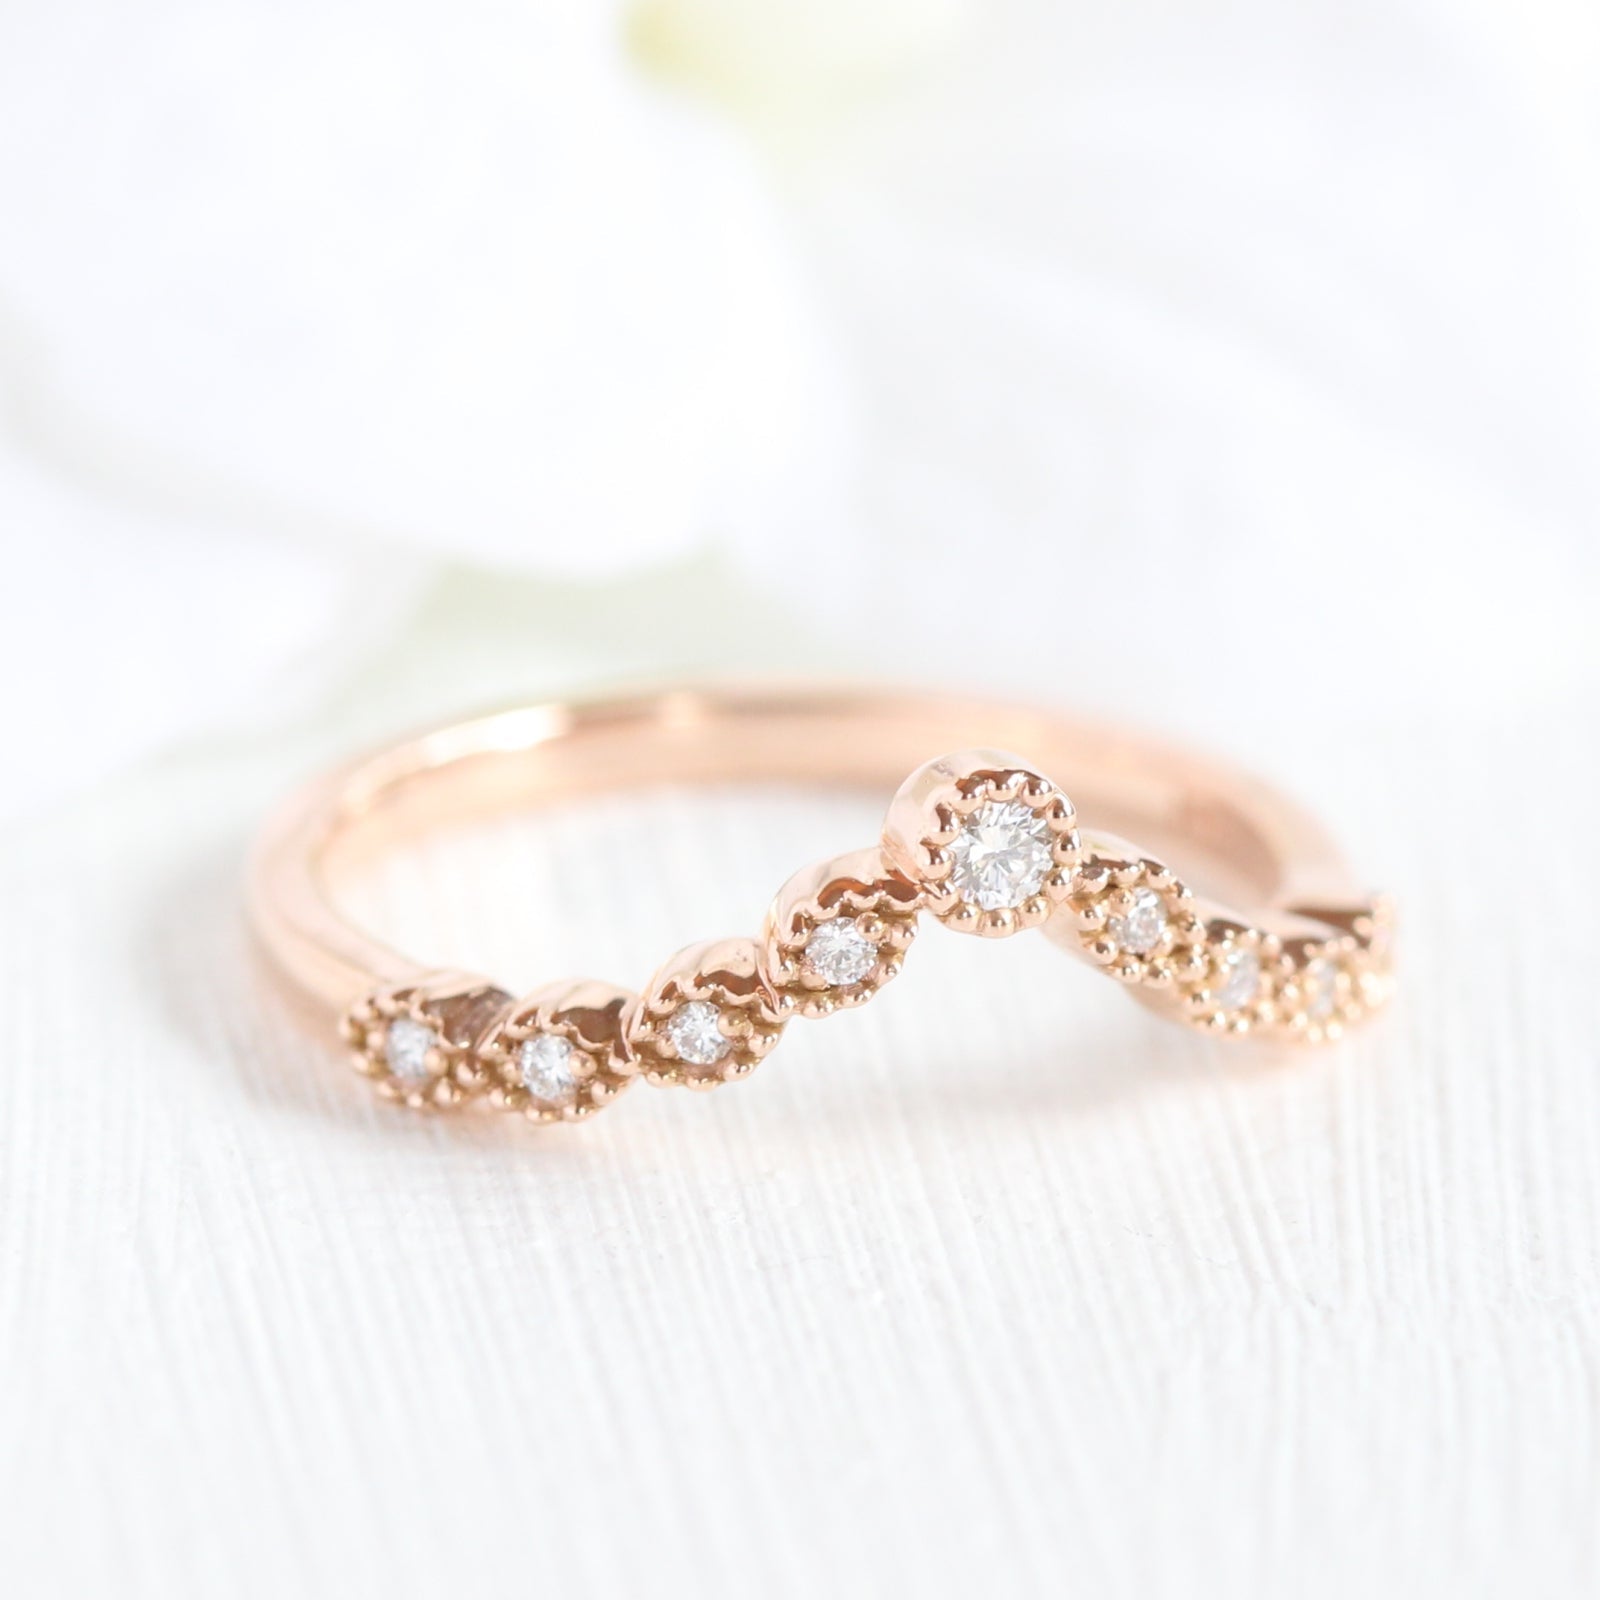 Milgrain Diamond Wedding Ring in 14K Rose Gold Curved U Band, Size 6